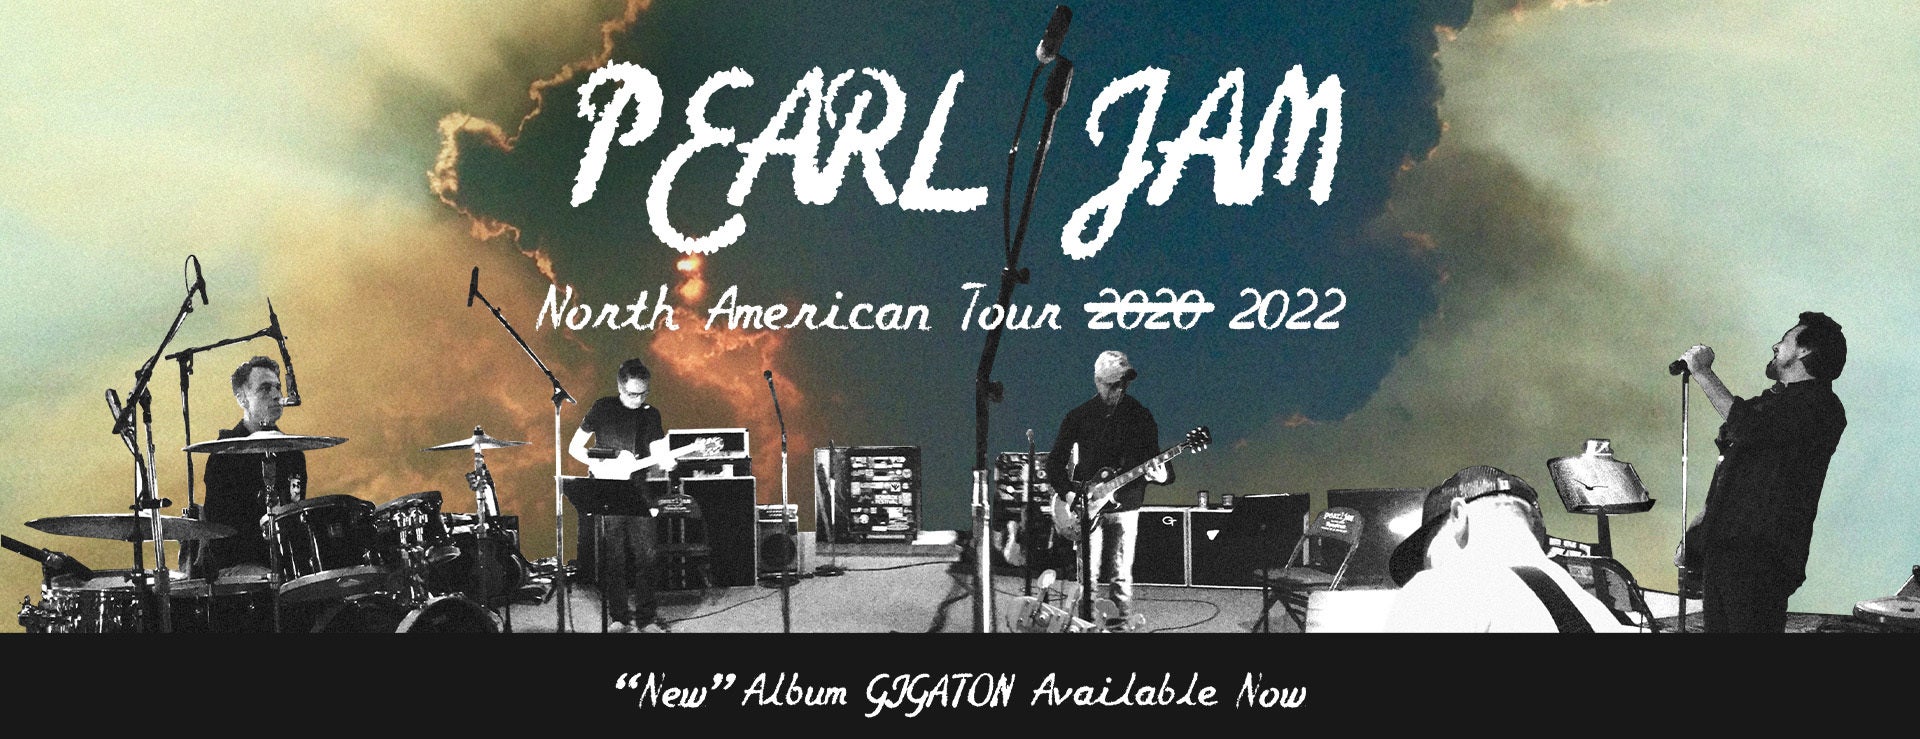 Pearl Jam  Core Entertainment